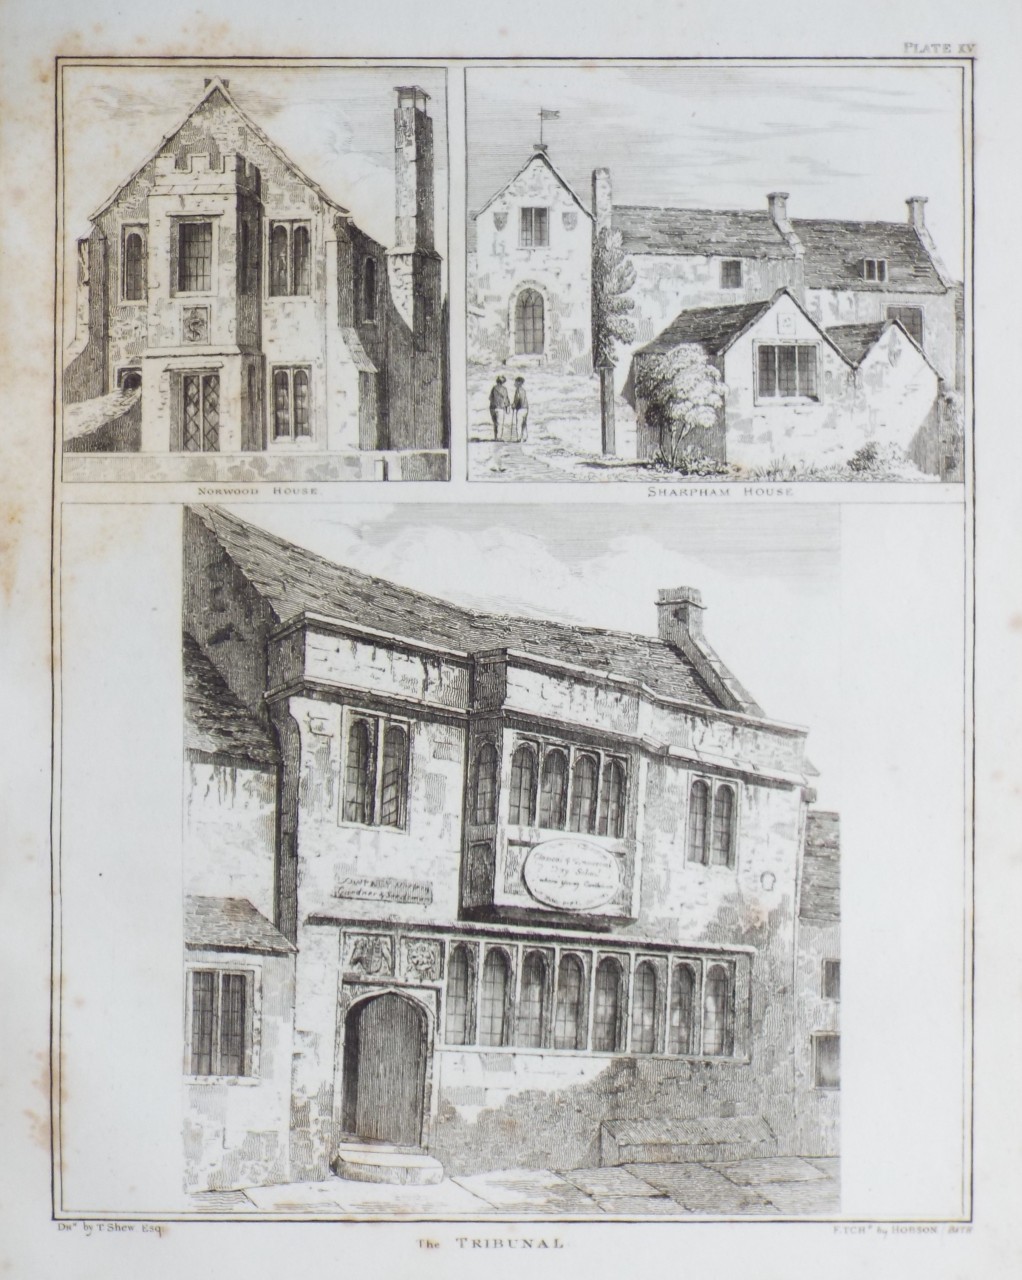 Print - Norwood House. Sharpham House. The Tribunal - 